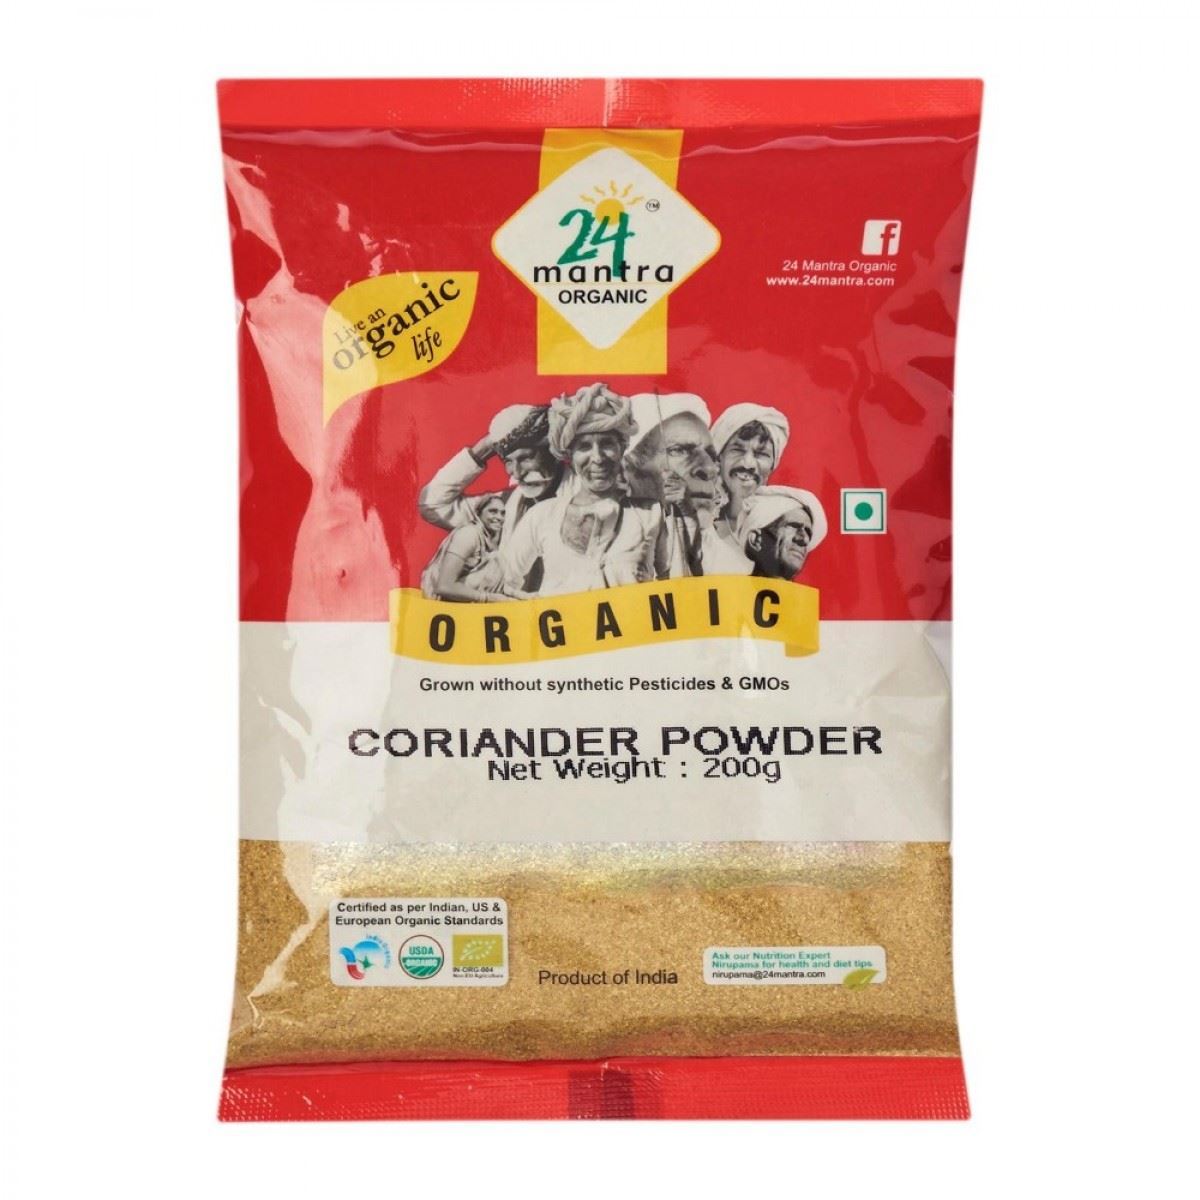 24 MANTRA Coriander Powder (Certified ORGANIC)